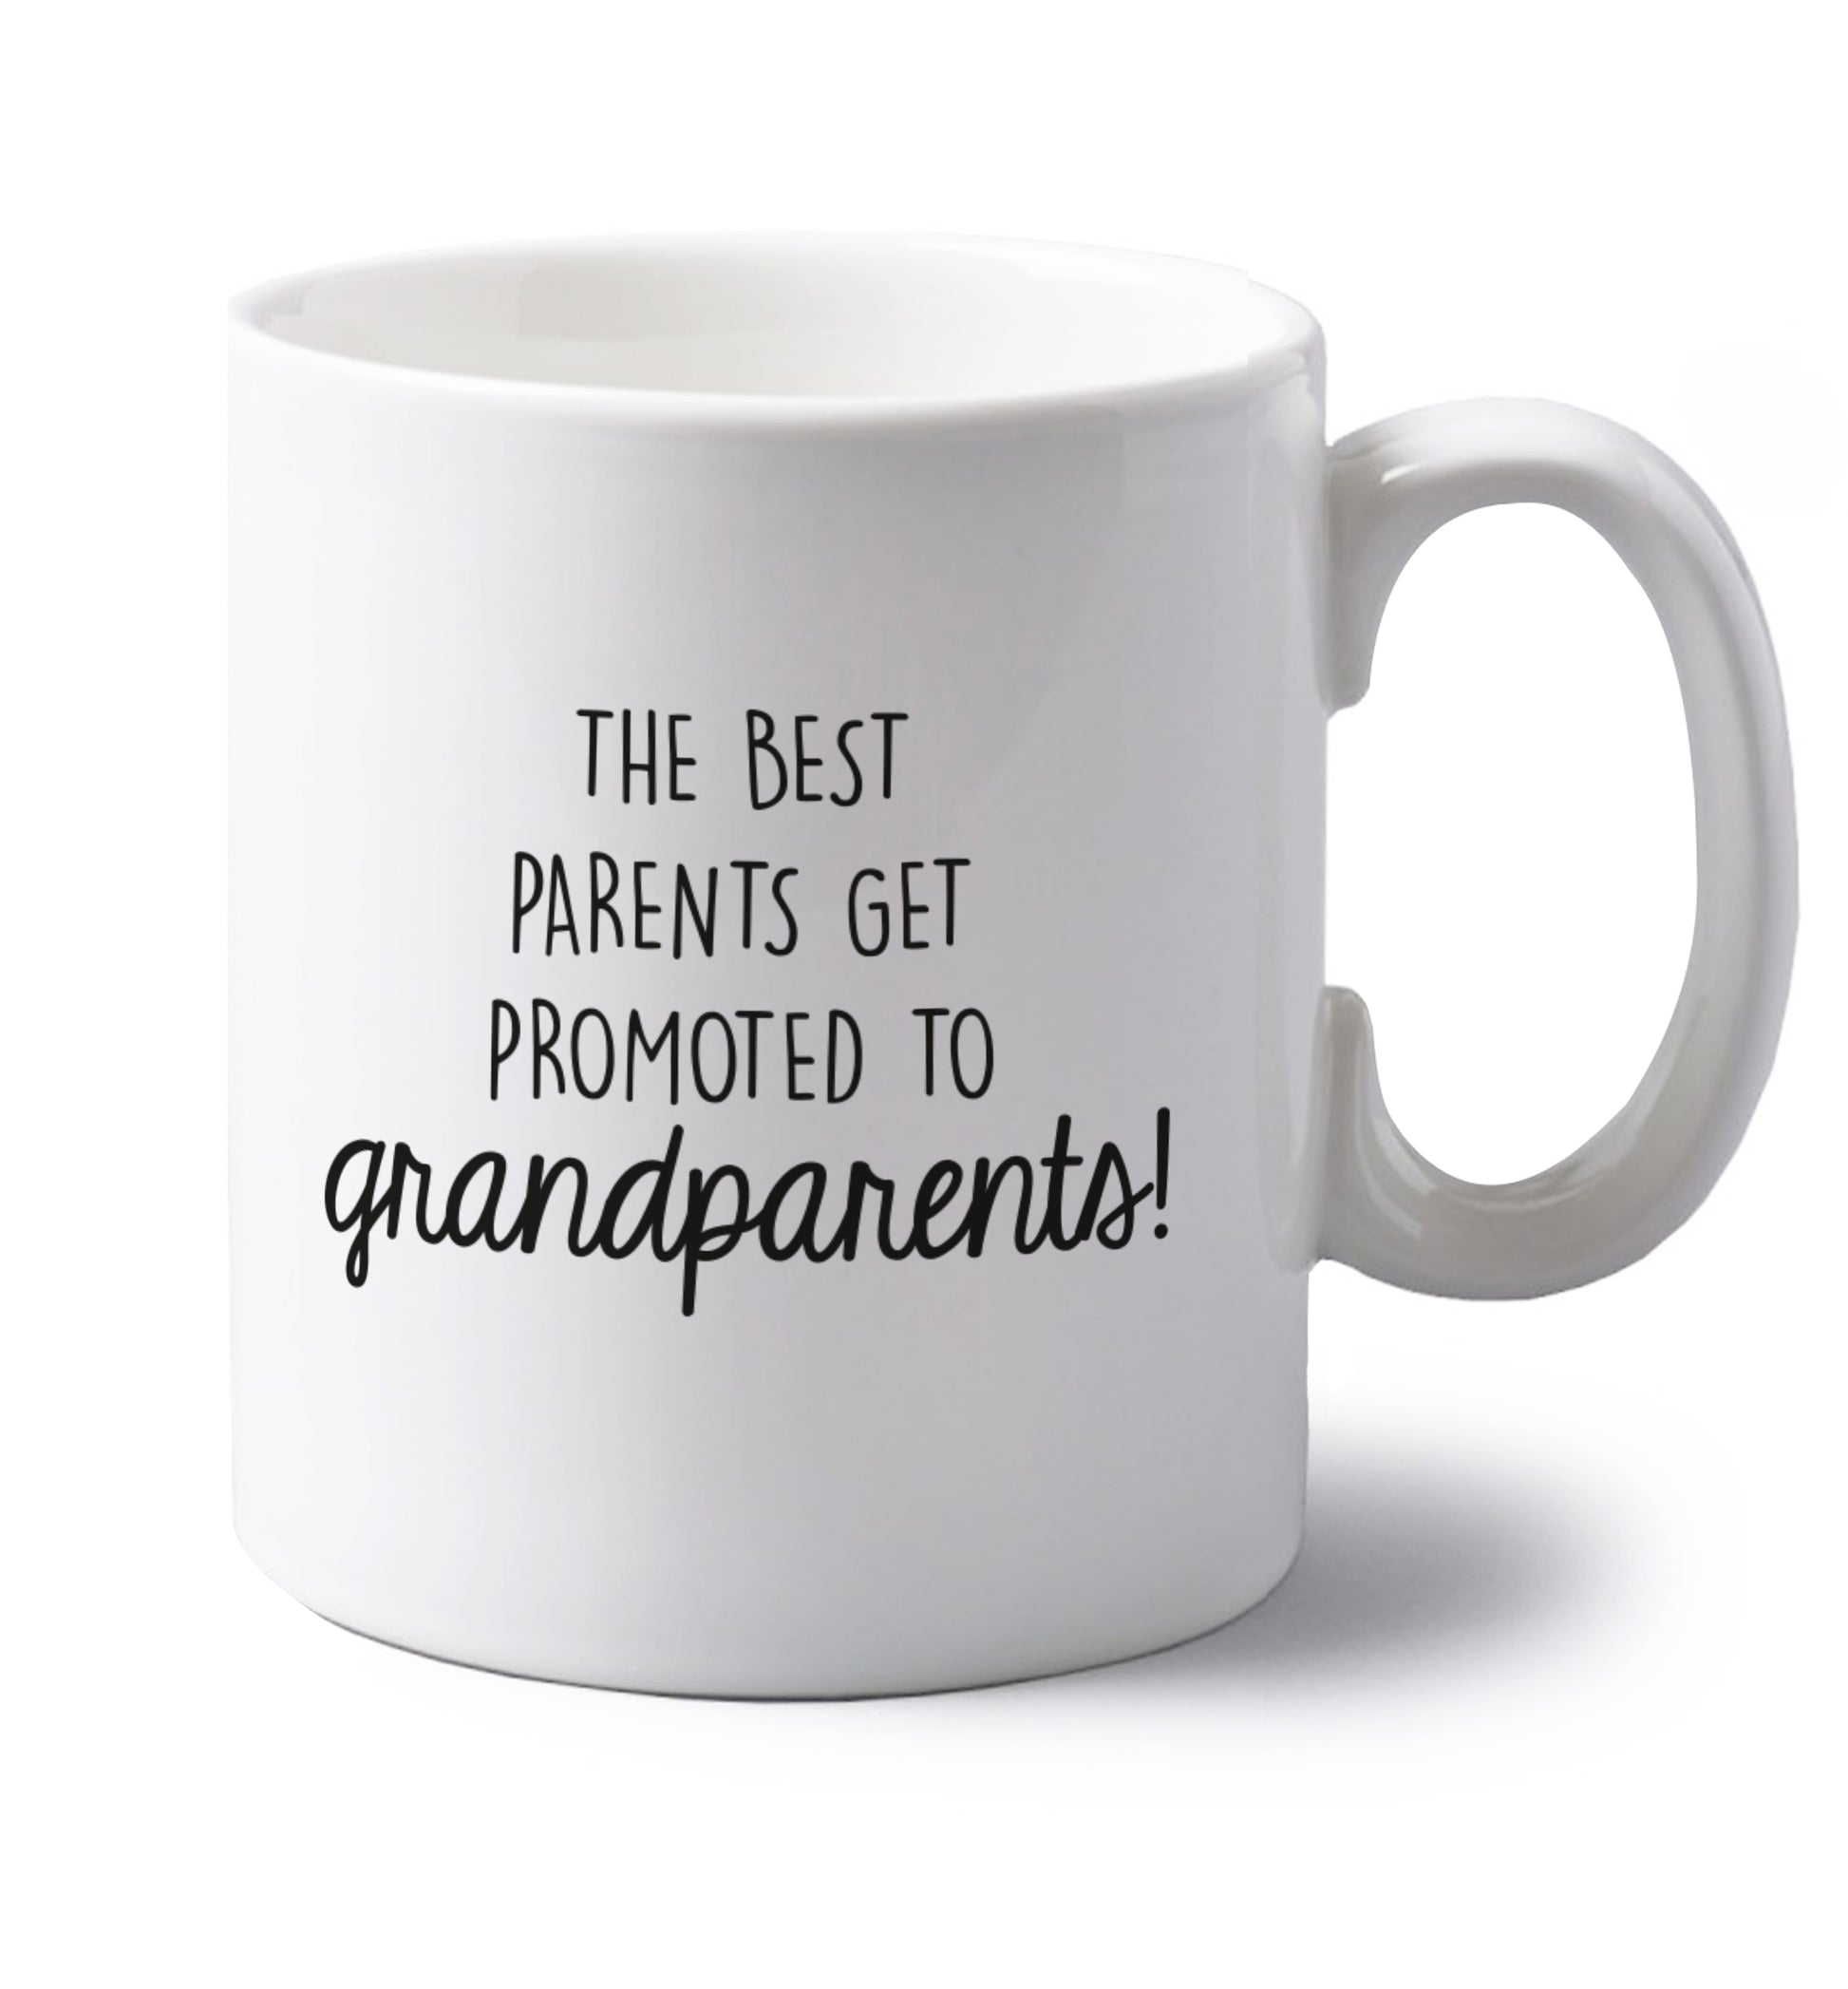 The best parents get promoted to grandparents left handed white ceramic mug 